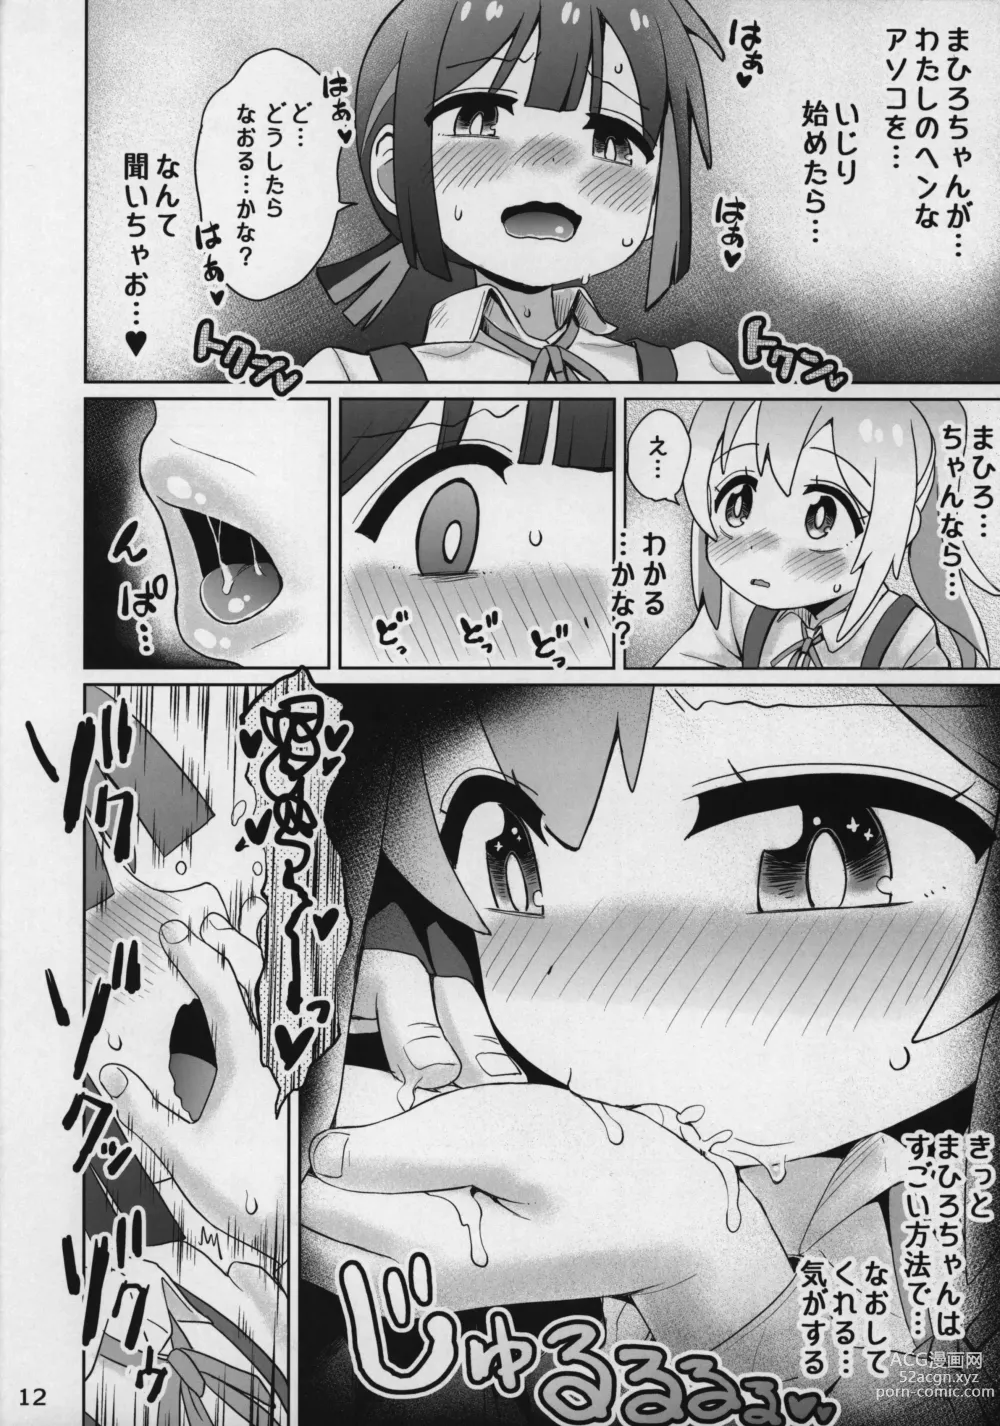 Page 12 of doujinshi Onii-chan de Onamomi